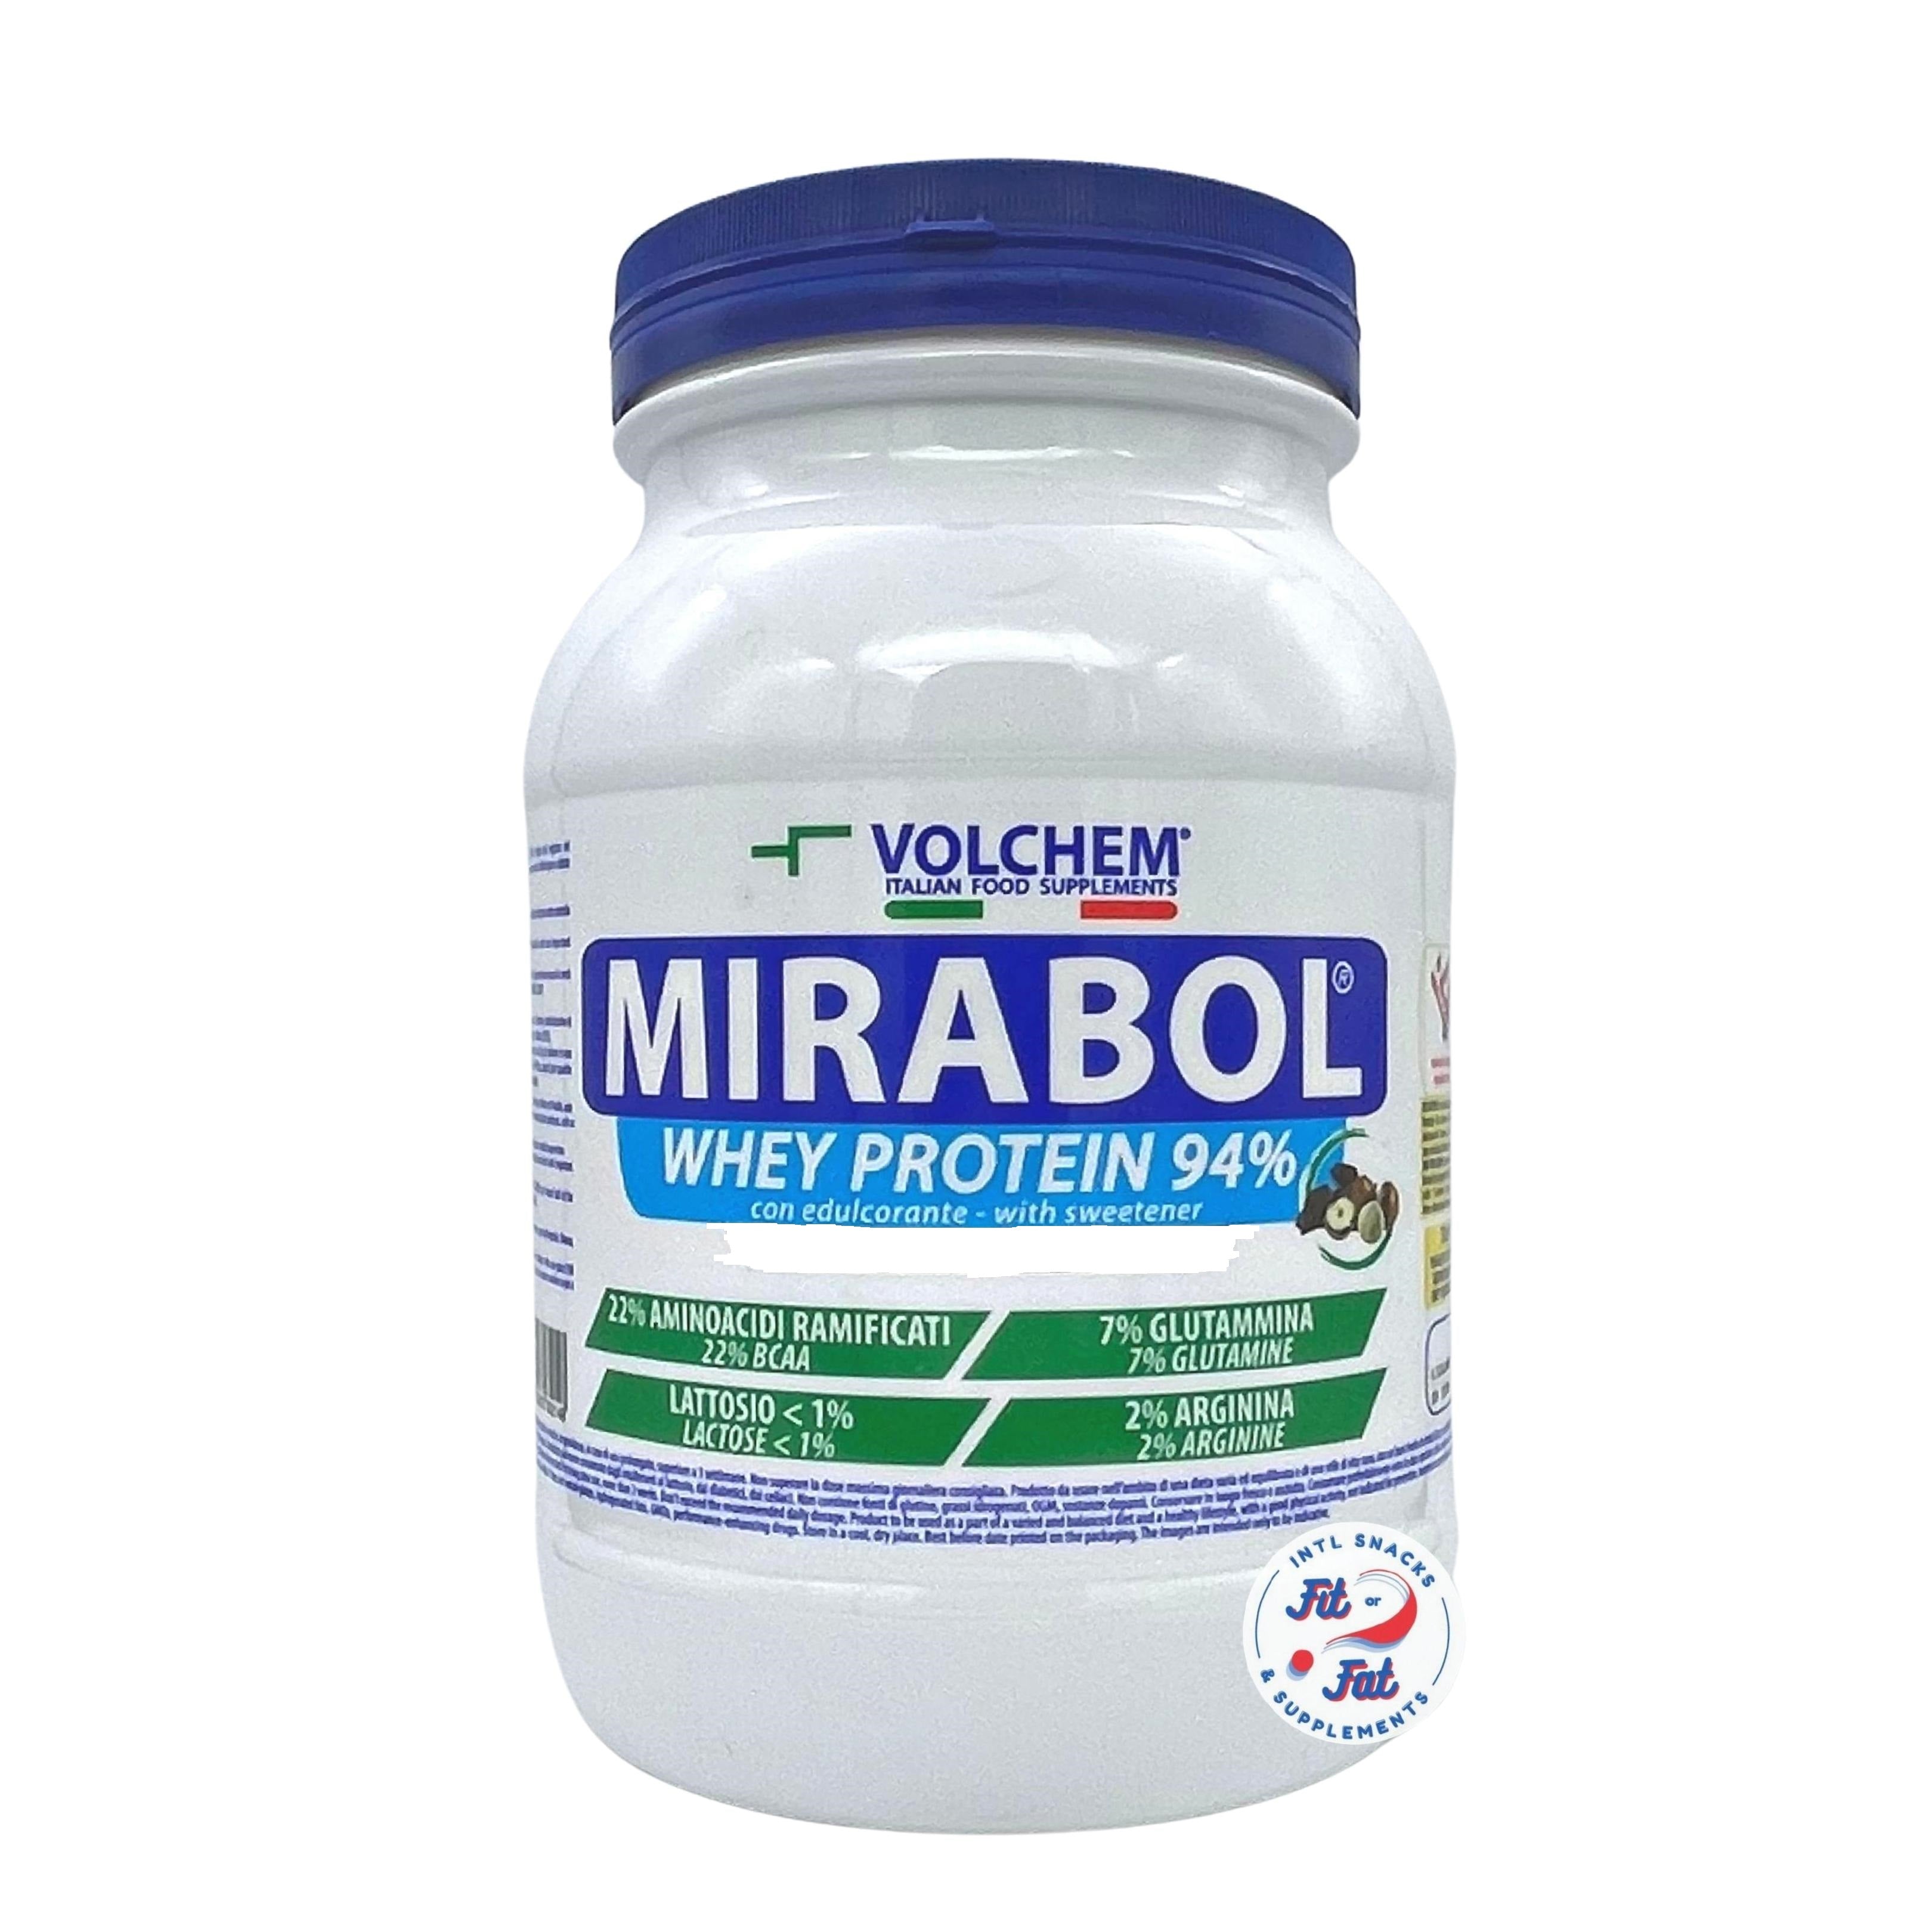 Volchem Mirabol Whey Protein 94% - Proteine Siero del Latte 750g Vaniglia